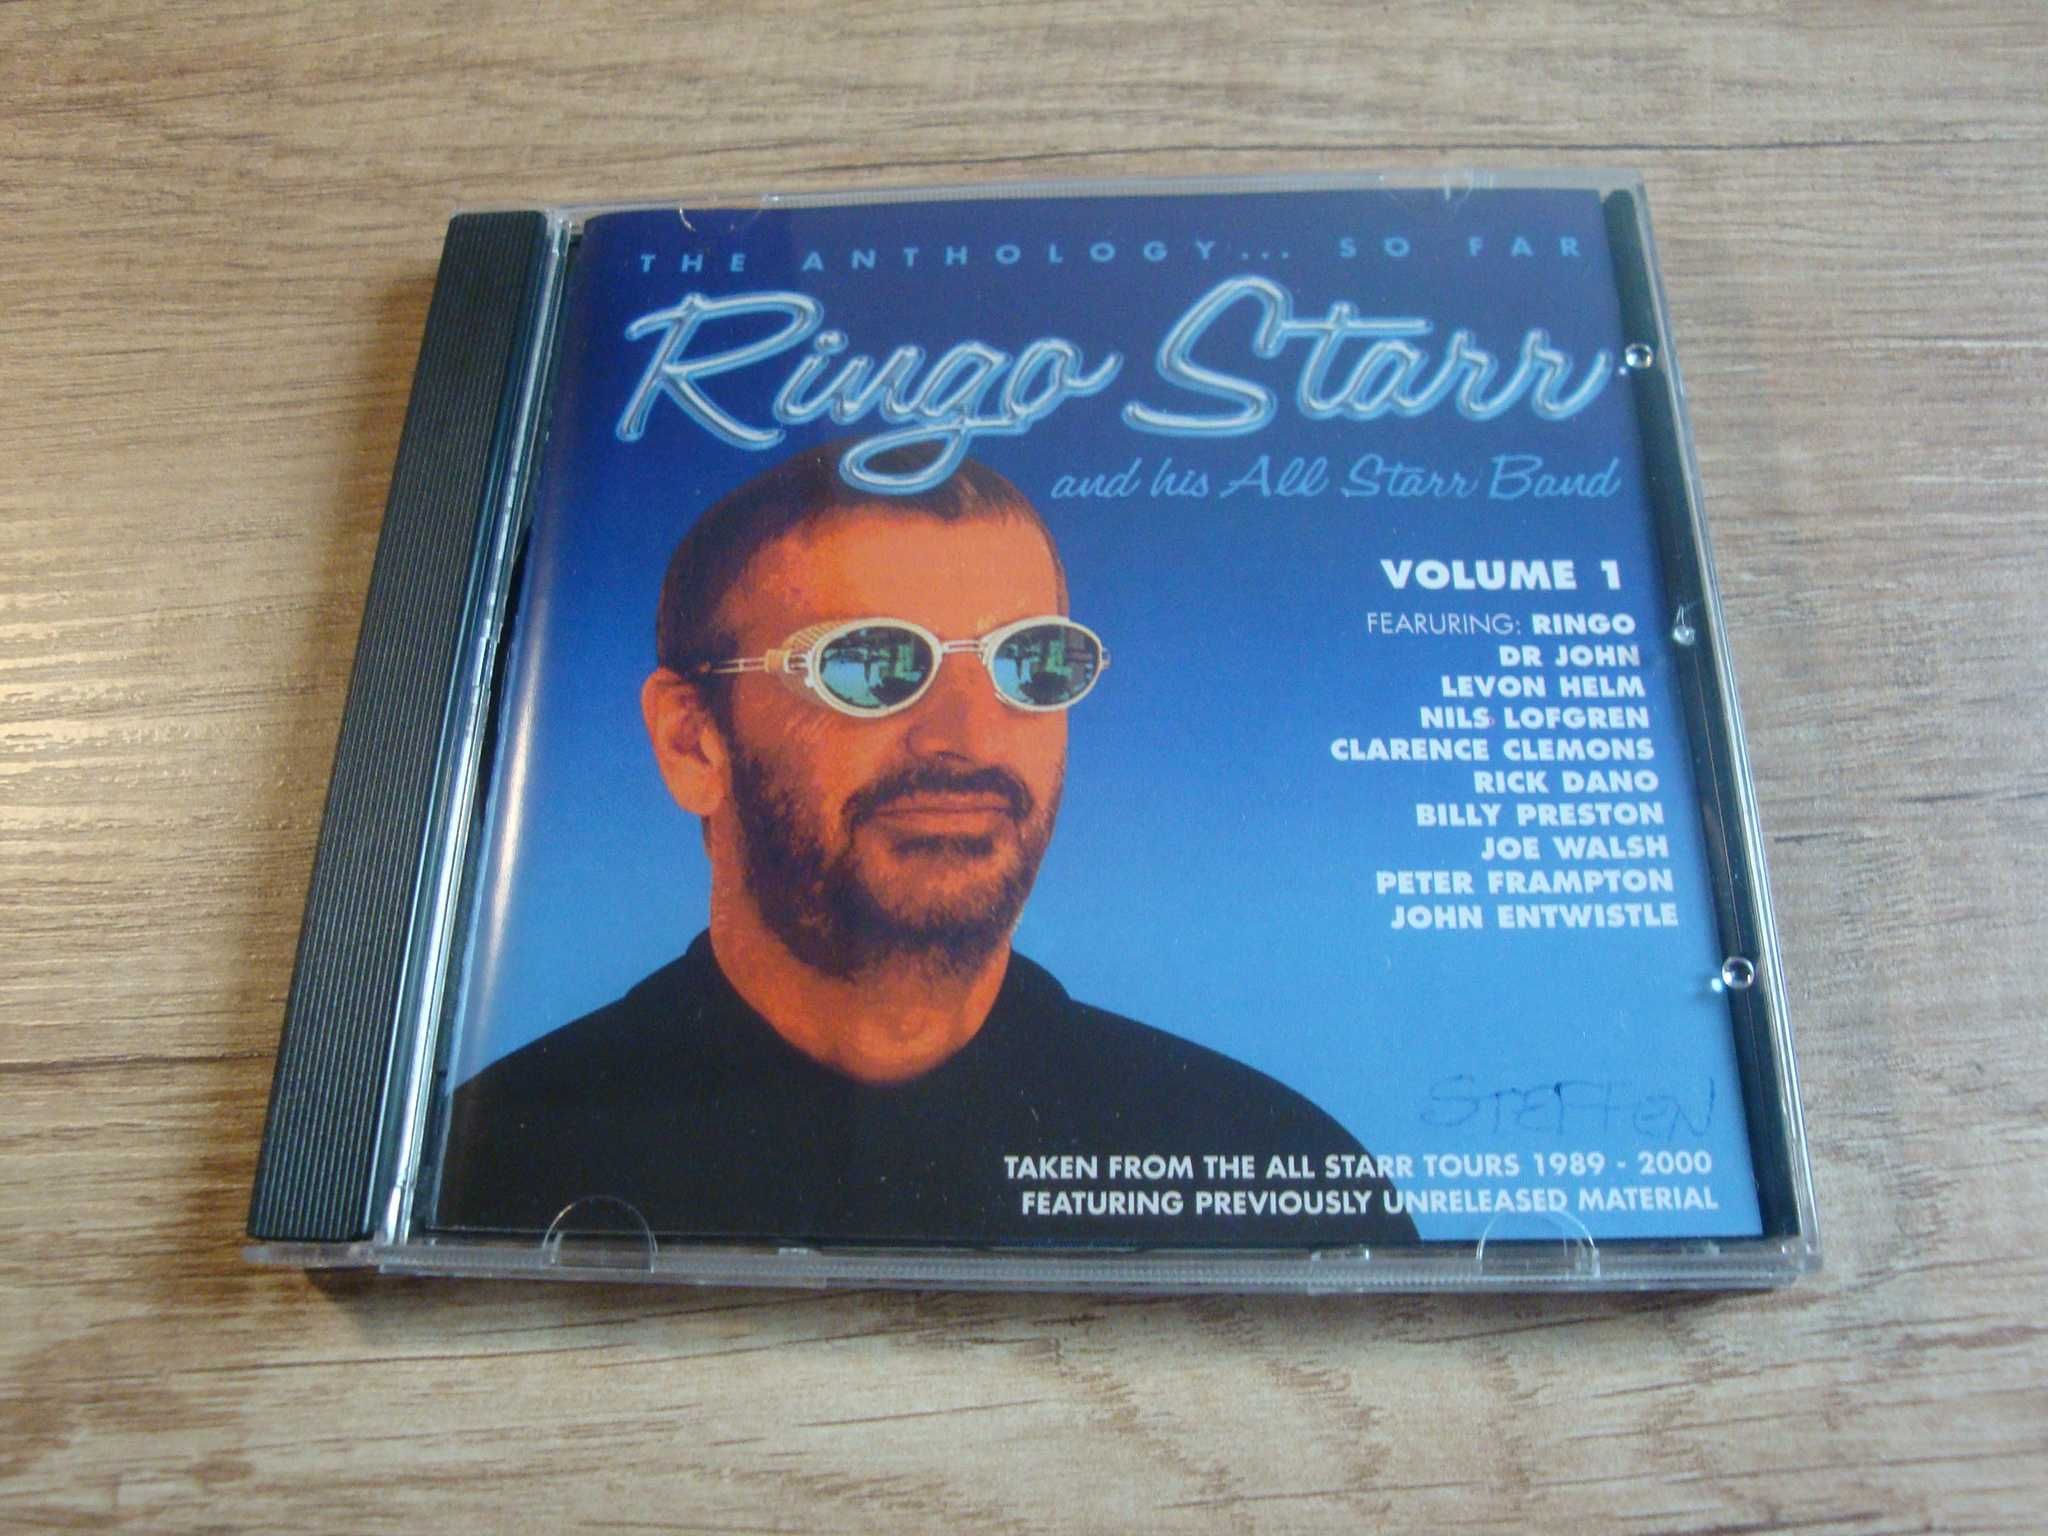 Ringo Starr - The Anthology...So Far Volume 1